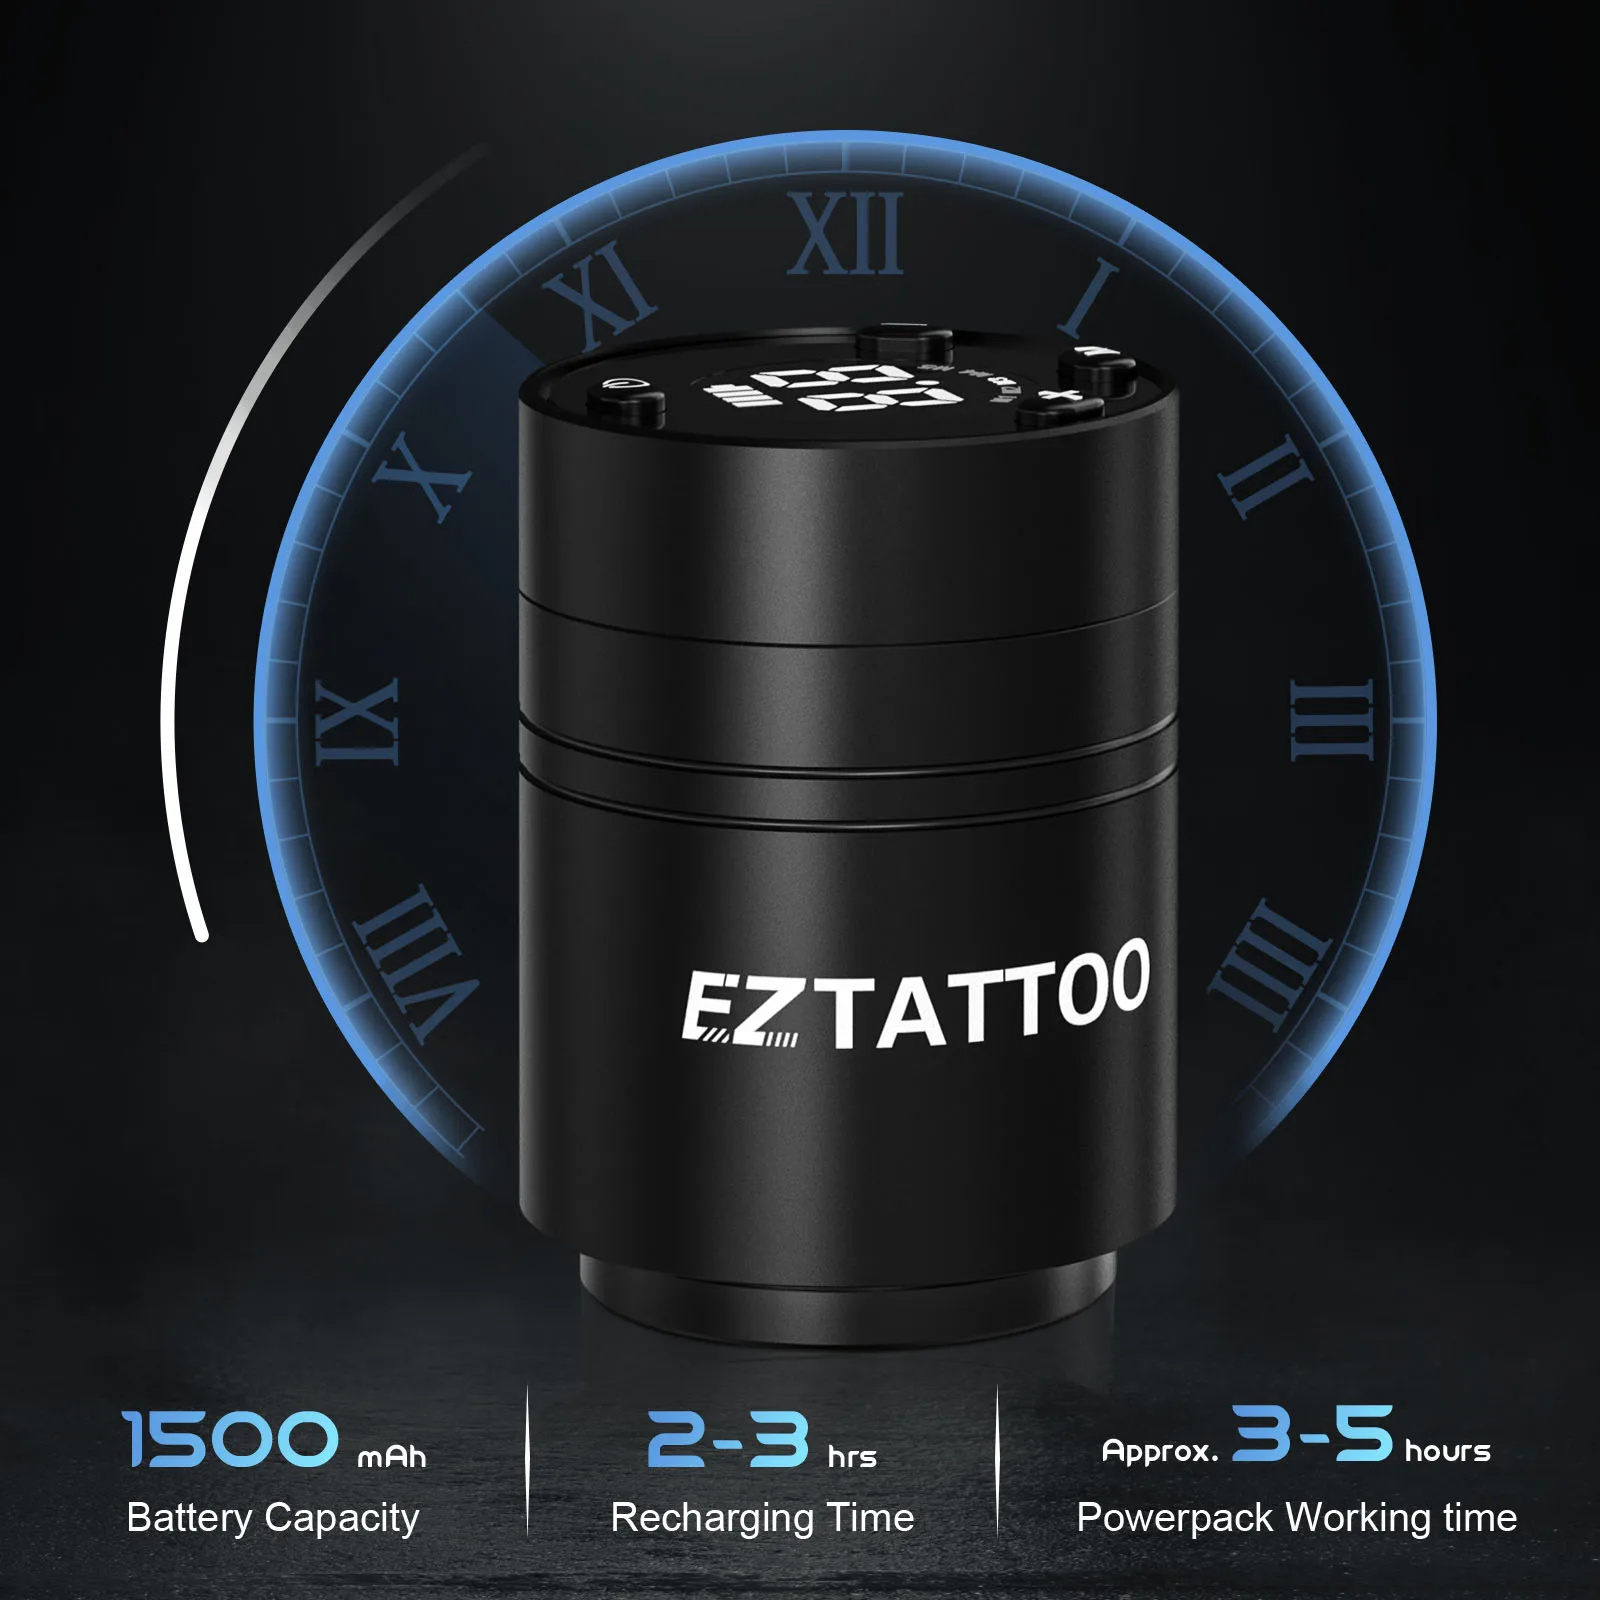 EZ Caster Wireless Cartridge Tattoo Machine pen  Rotaty Battery Pen with Portable Power Pack 1500mAh LED Digital Display